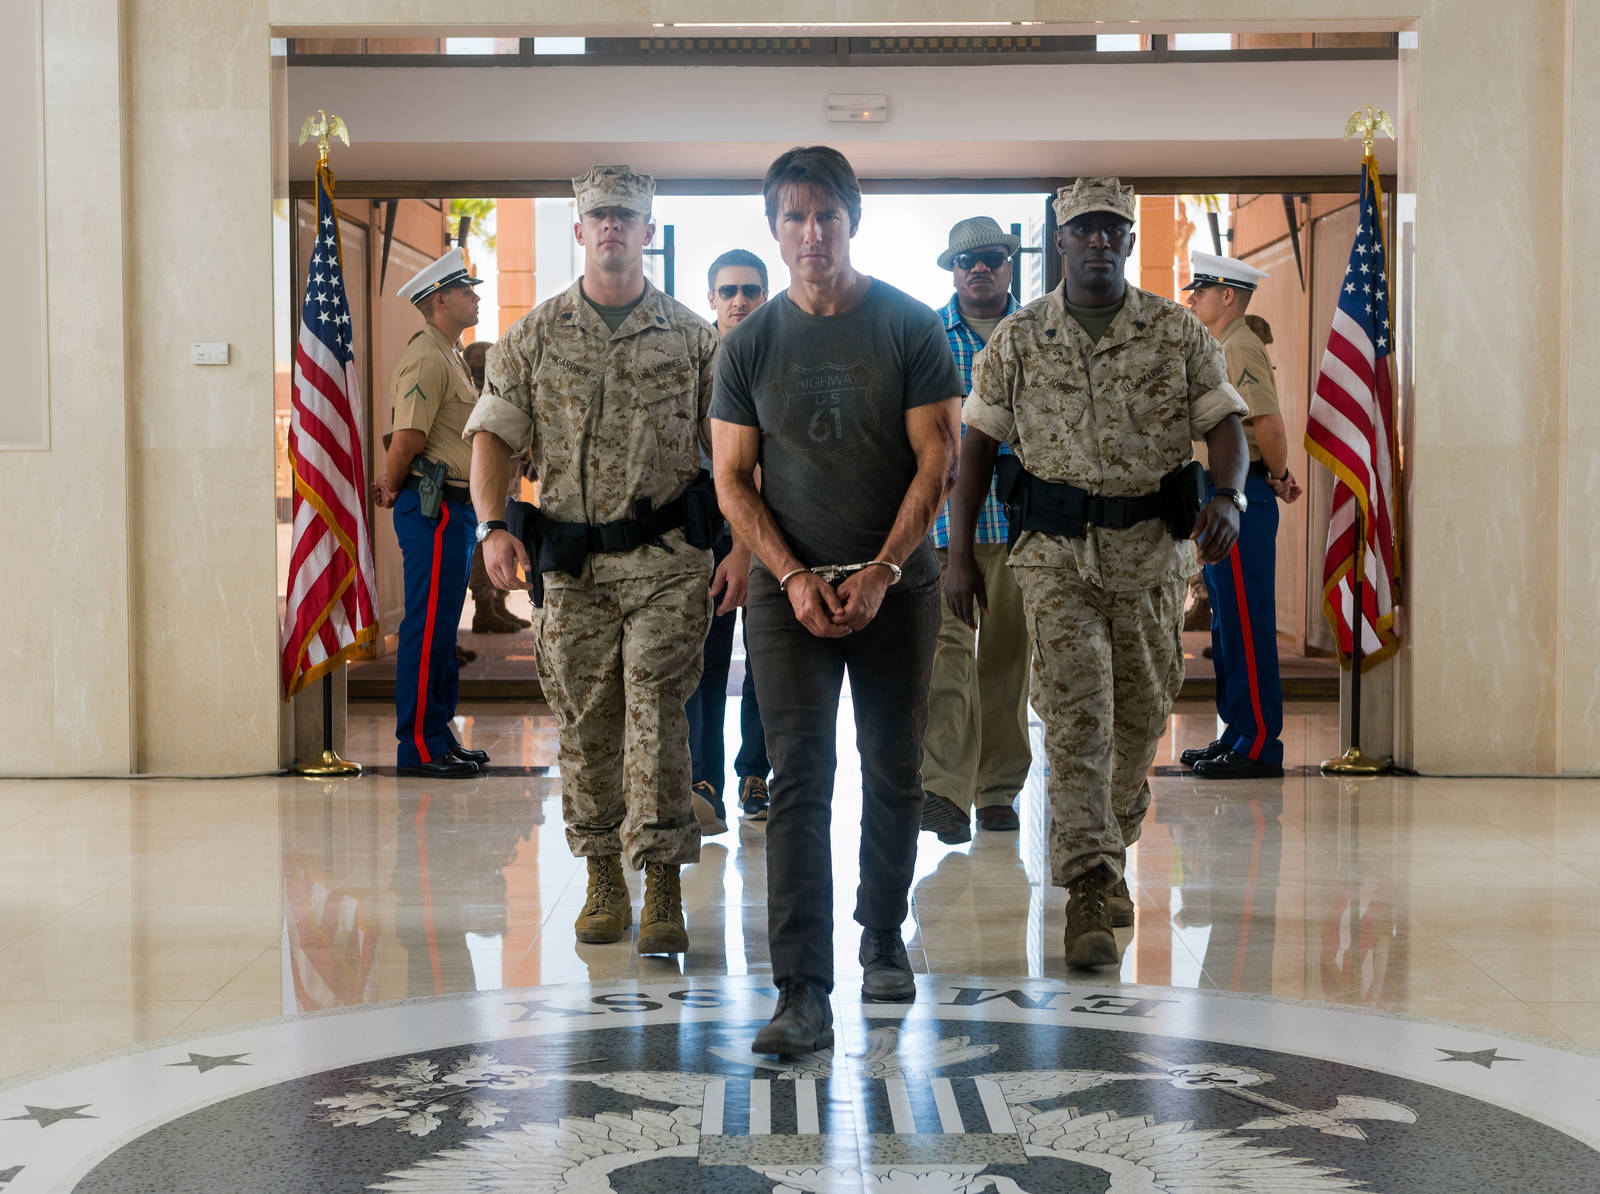 Mission Impossible 5 - Národ grázlov (2015) - fotografie